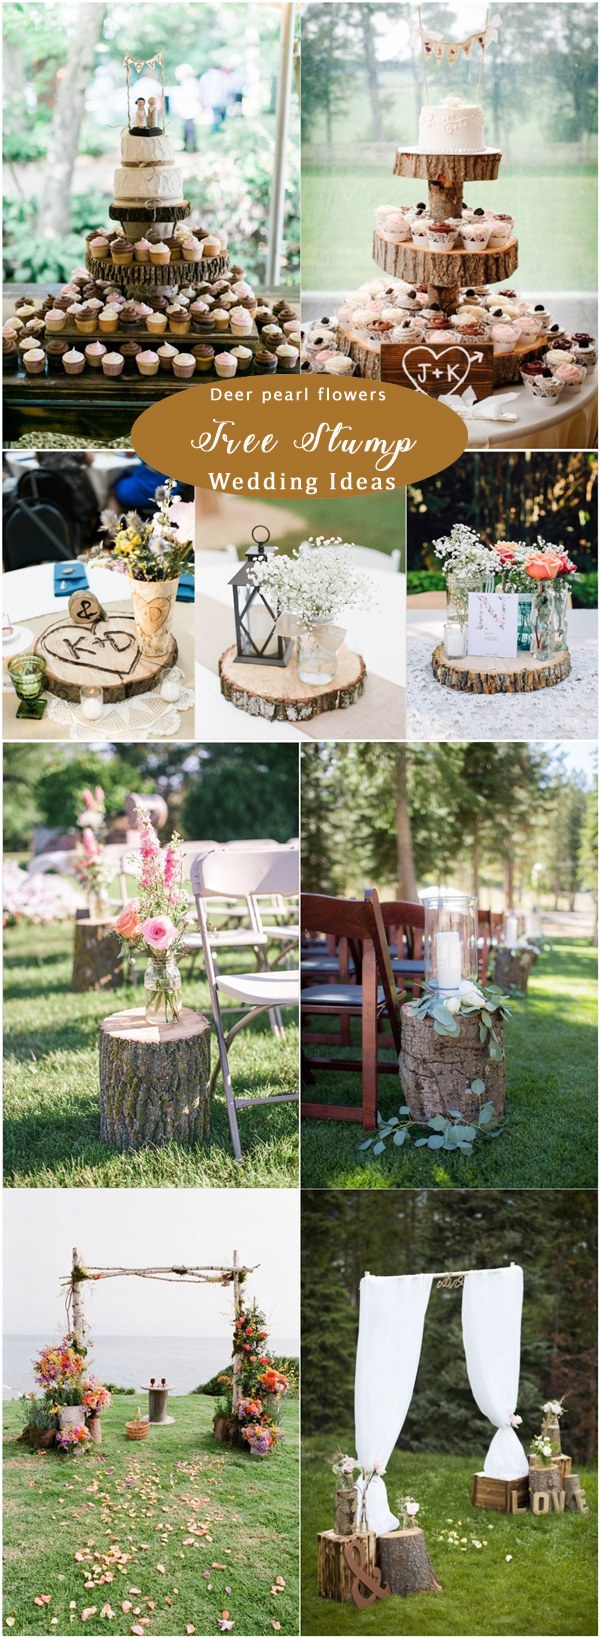 Rustic wood stump wedding ideas